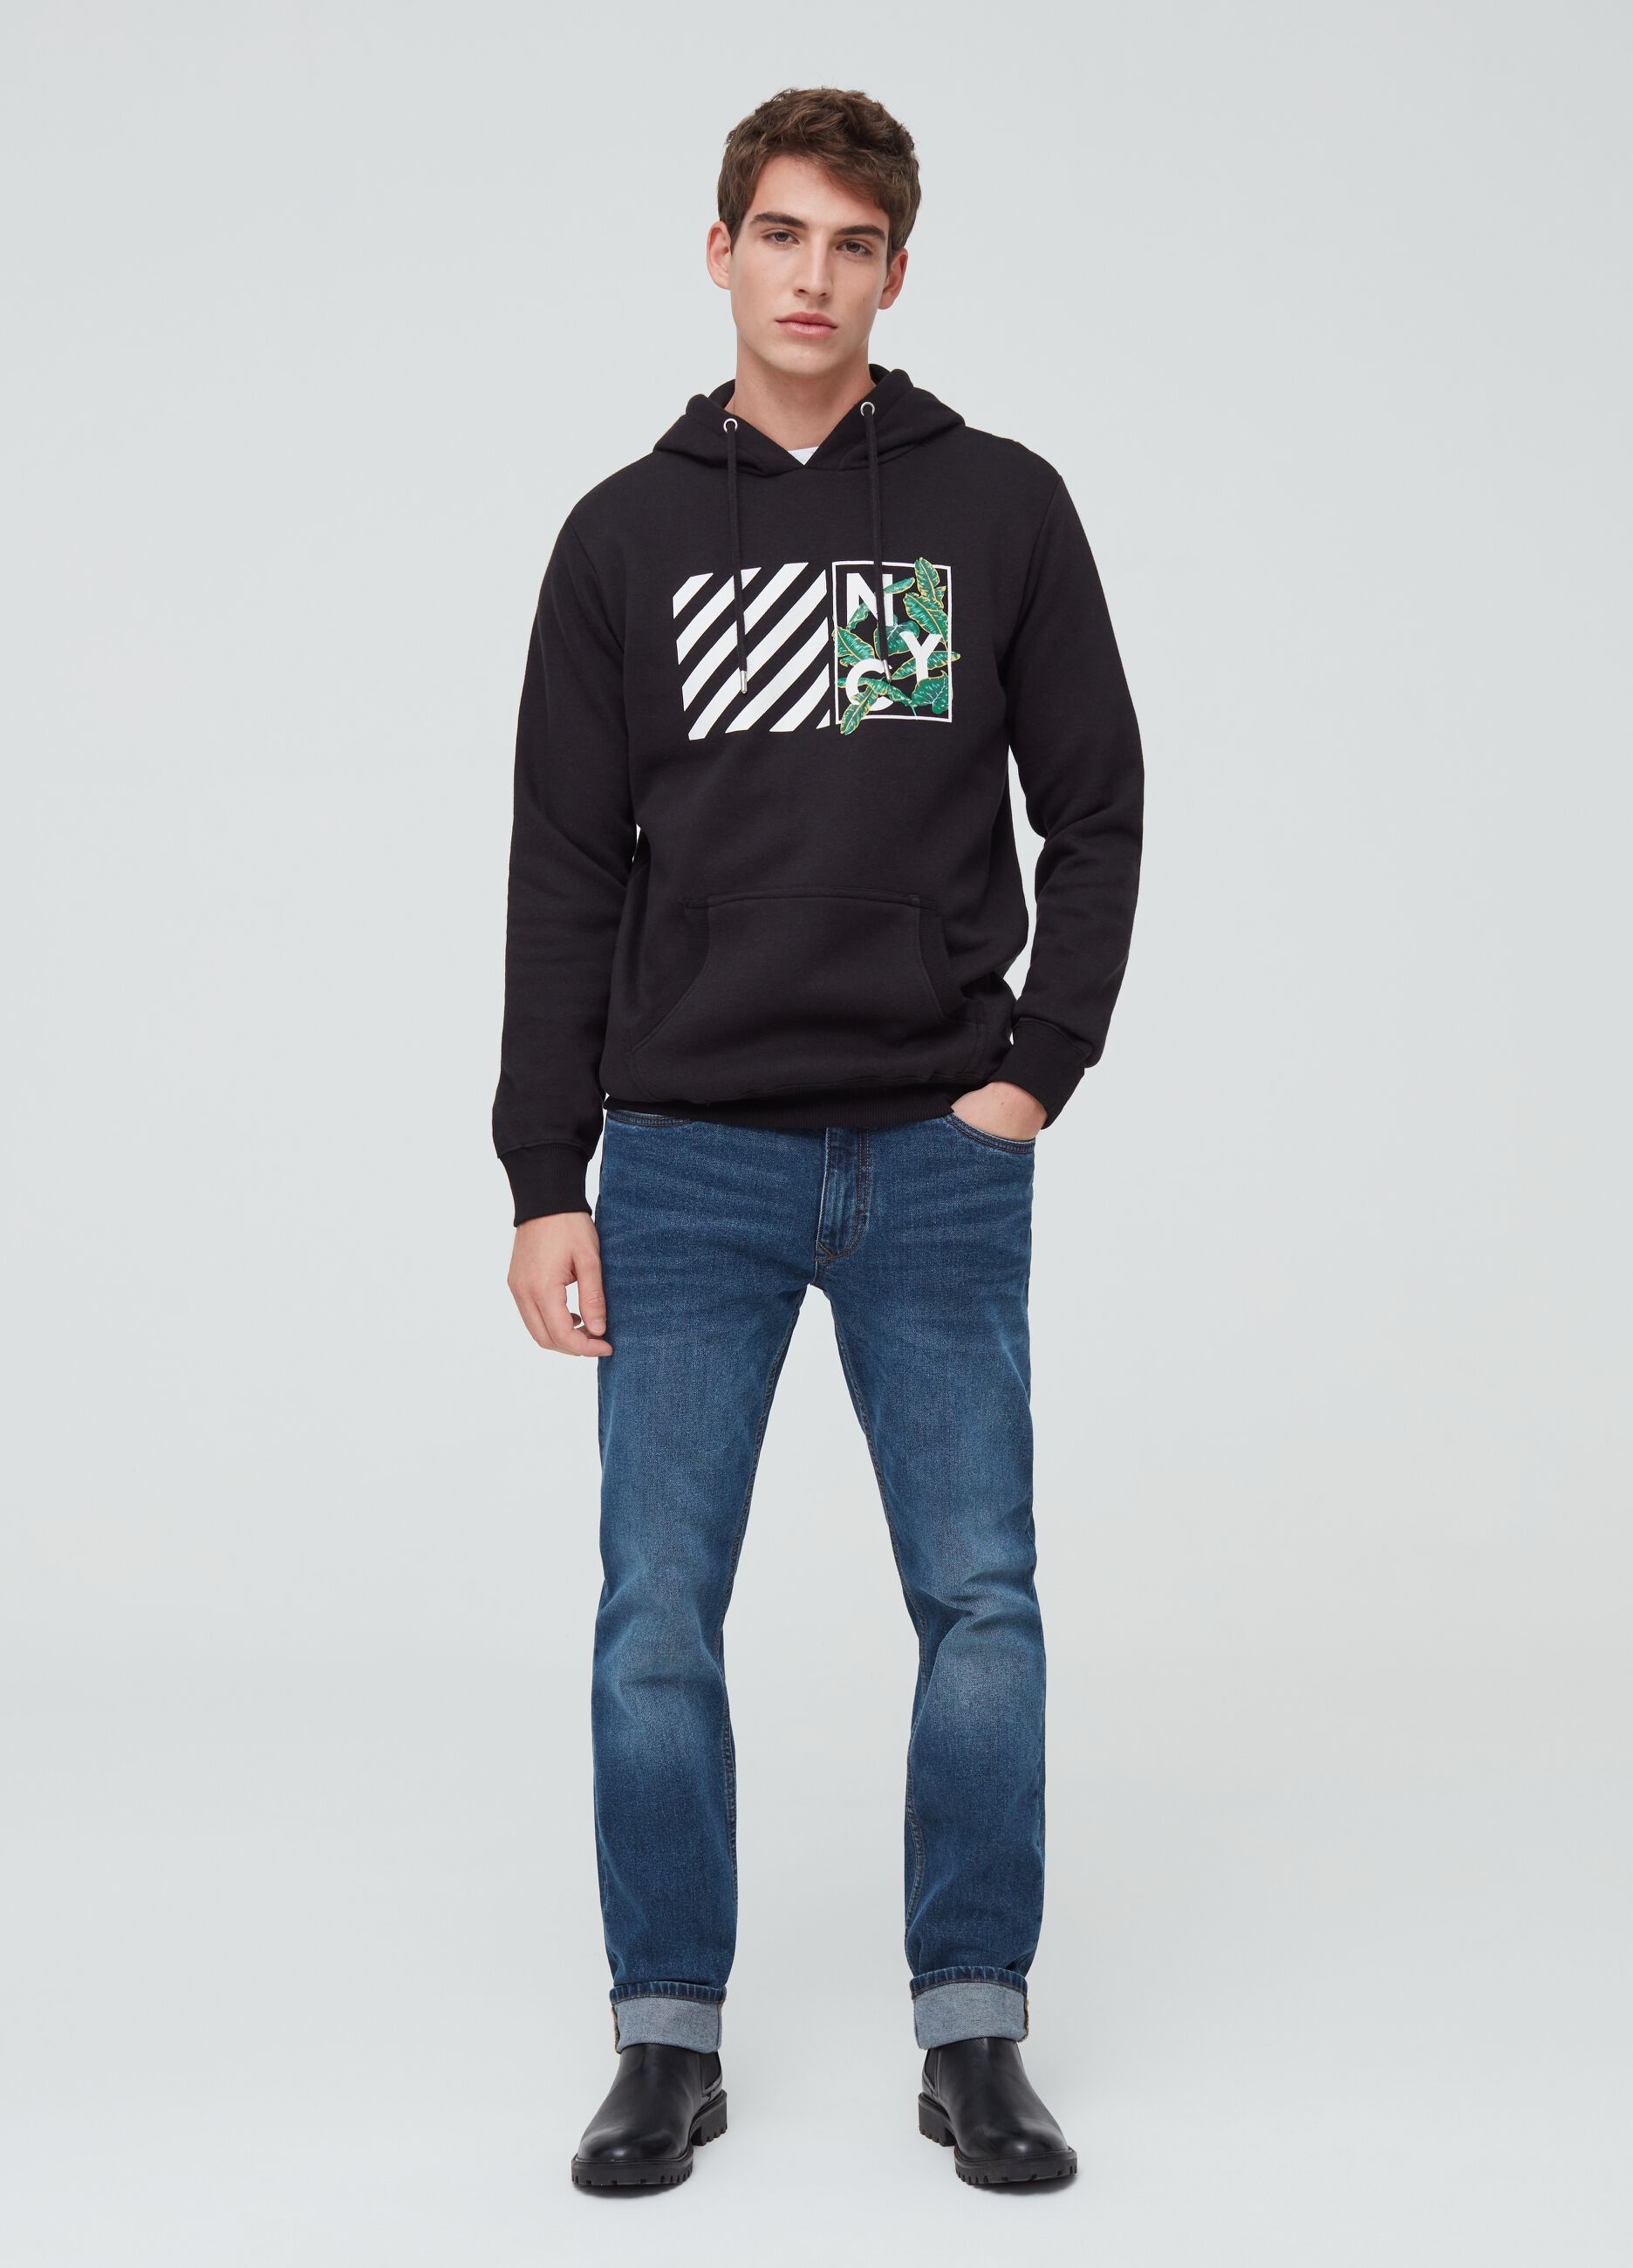 Sweatshirt with hood and leaves print